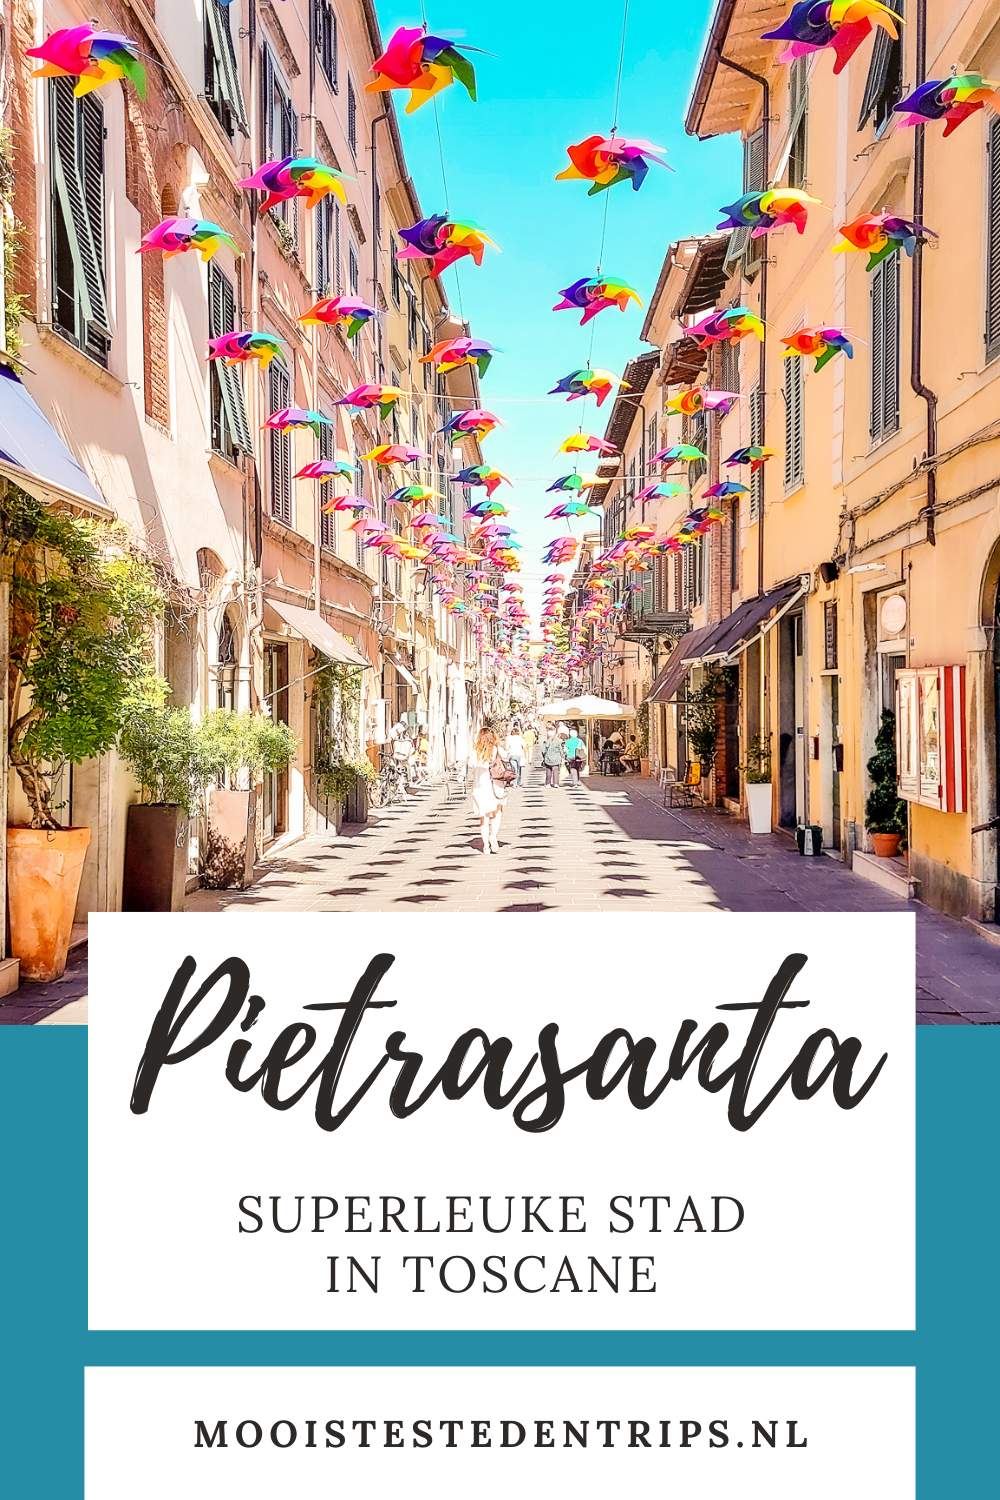 Pietrasanta, Italië: ontdek deze verrassende stad in Toscane. Bekijk alle bezienswaardigheden in Pietrasanta | Mooistestedentrips.nl